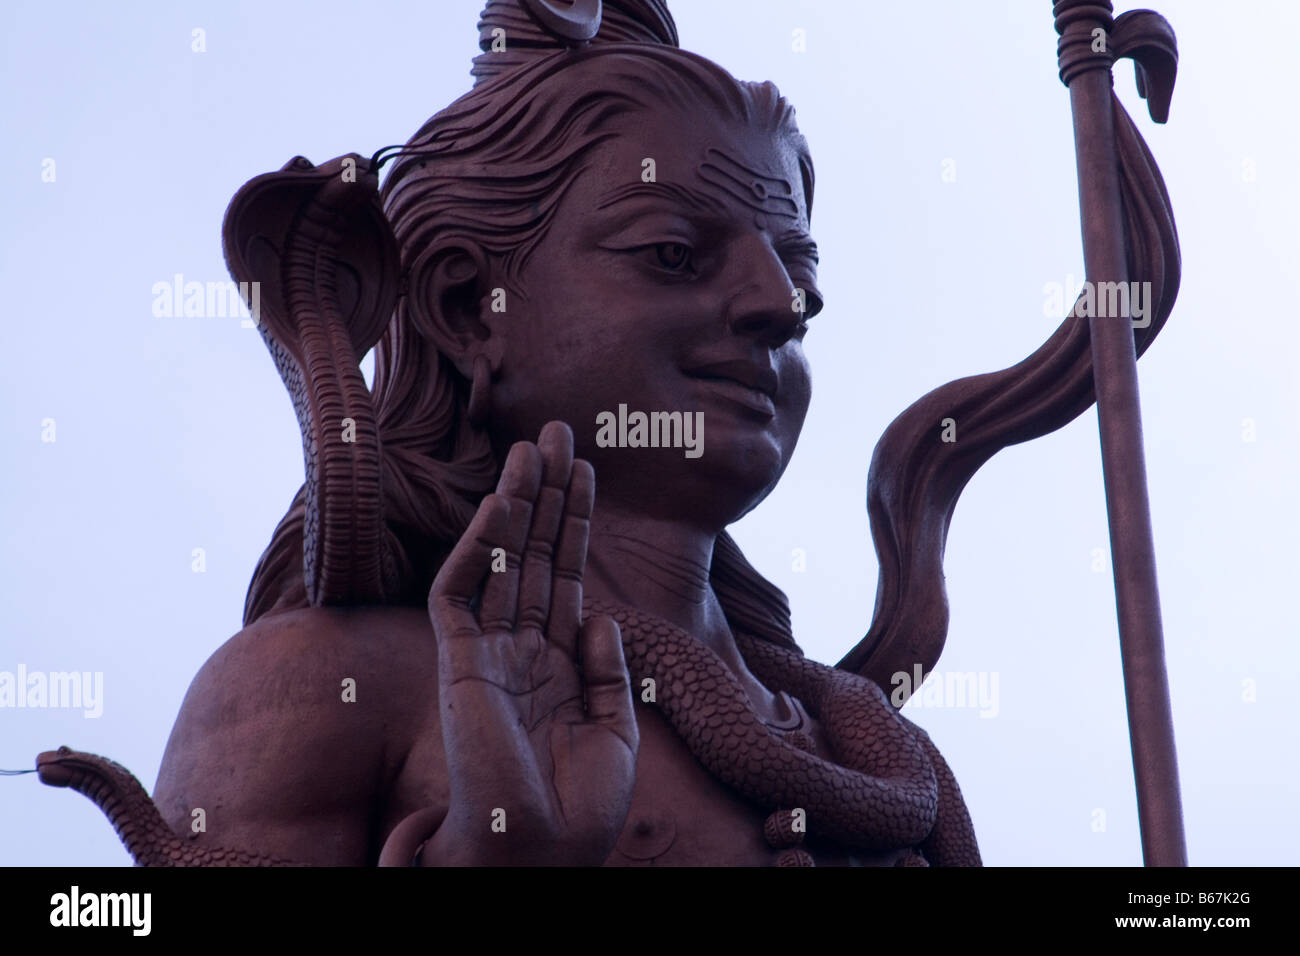 Kopf & Schulter Detail einer großen Statue des Hindu Gott Shiva, auch bekannt als Mangal Mahadev, Grand Bassin, Mauritius hautnah. Stockfoto